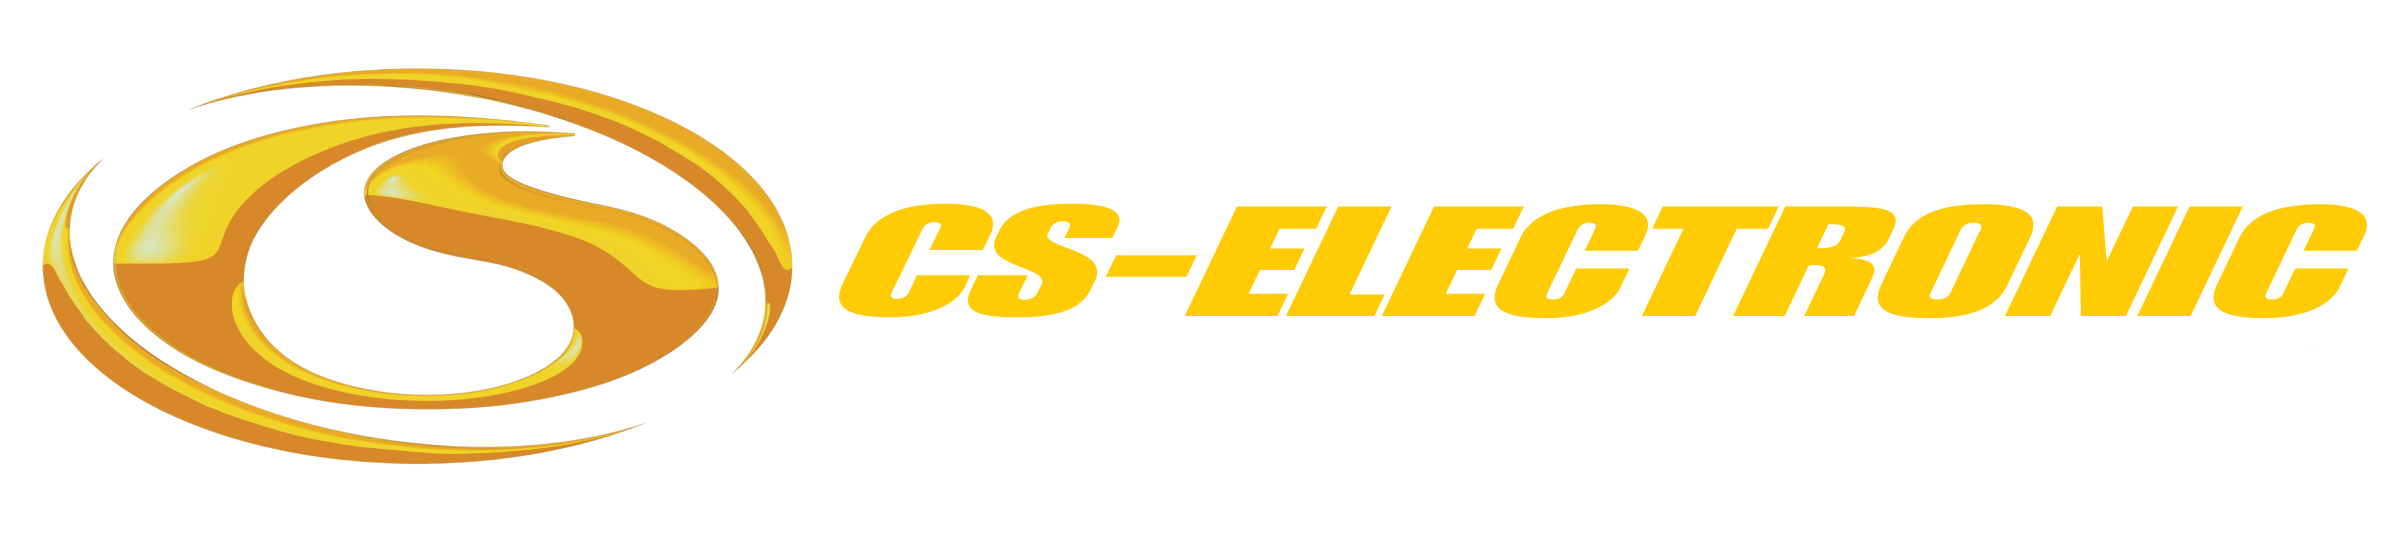 CS ELECTRONIC GmbH